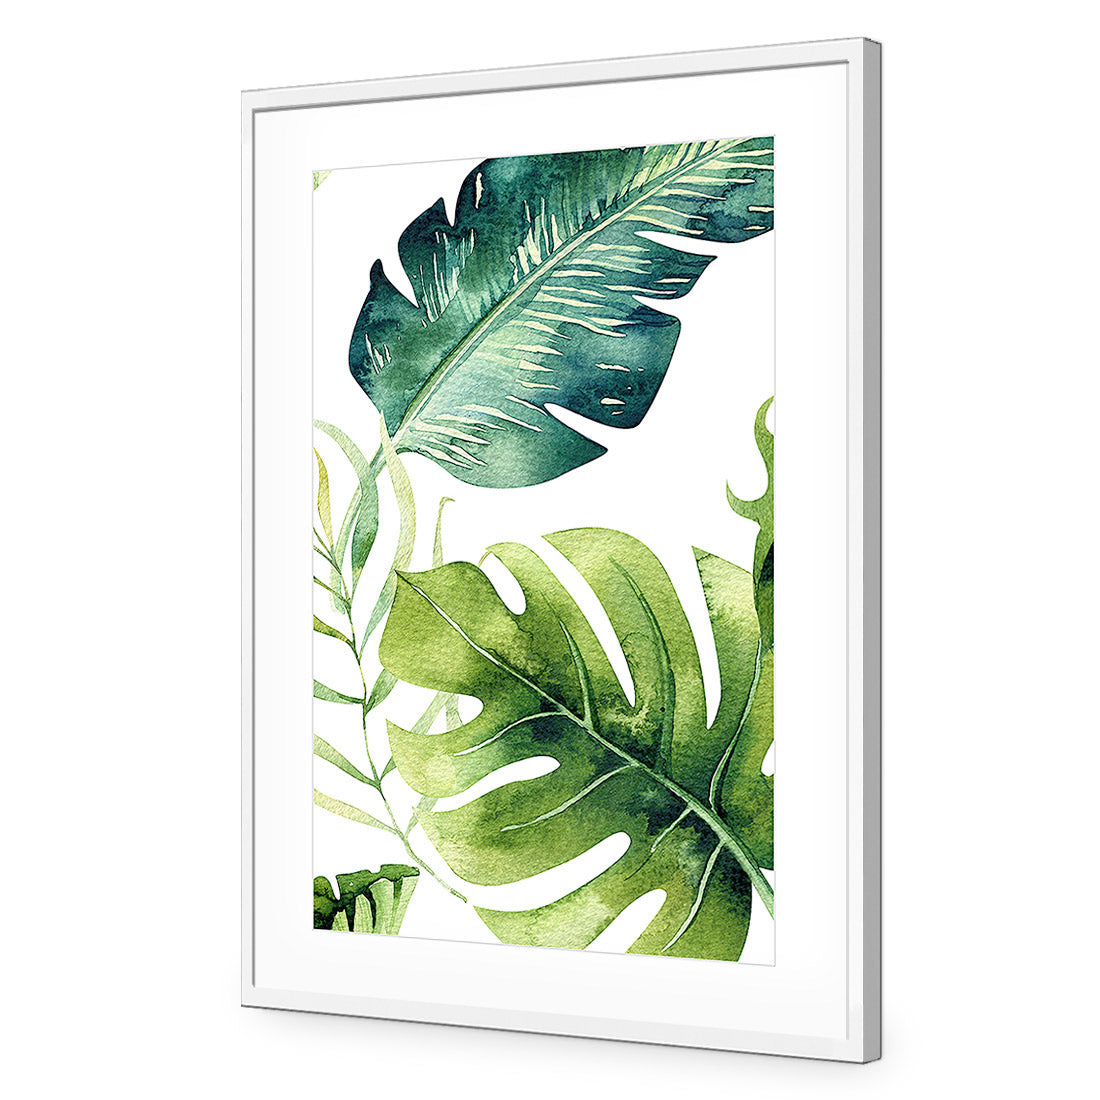 Fascinating Foliage Version 02 Acrylic Glass Art-Acrylic-Wall Art Design-With Border-Acrylic - White Frame-45x30cm-Wall Art Designs